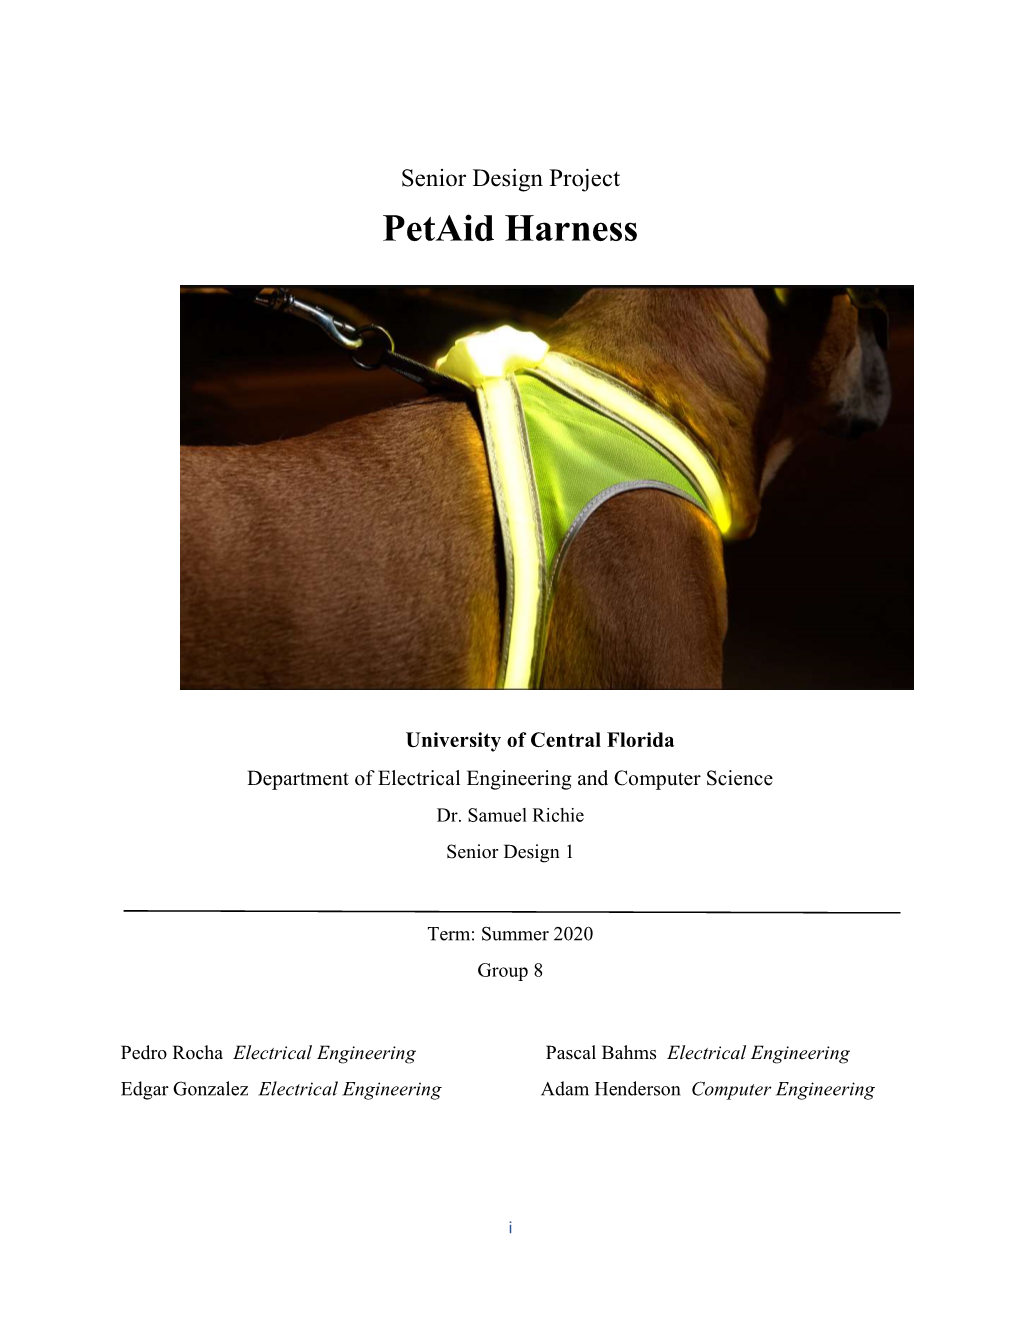 Petaid Harness